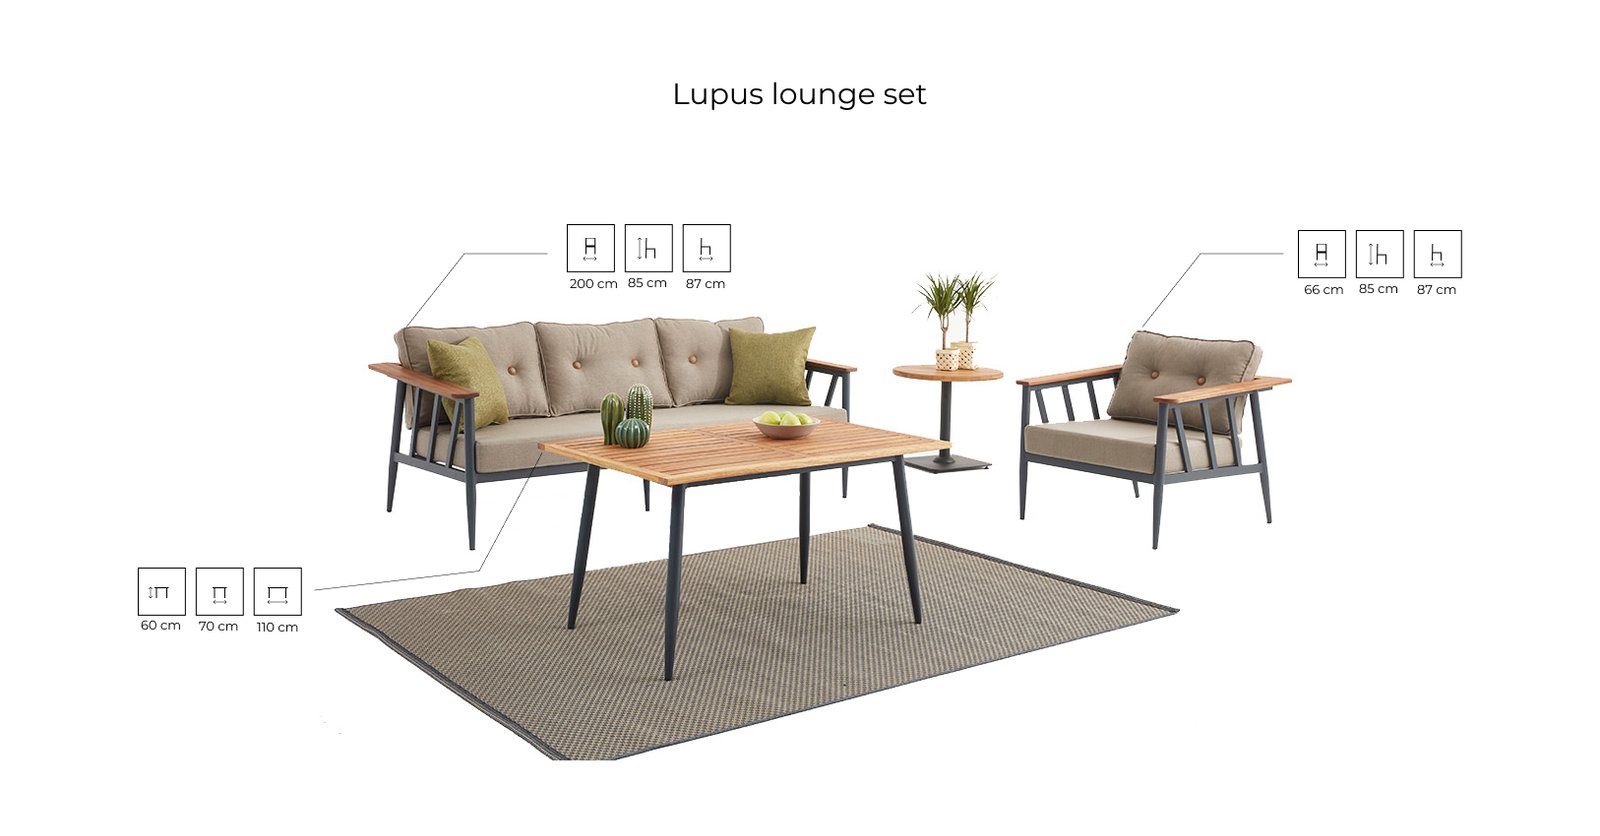 Lupus lounge set dimenzije